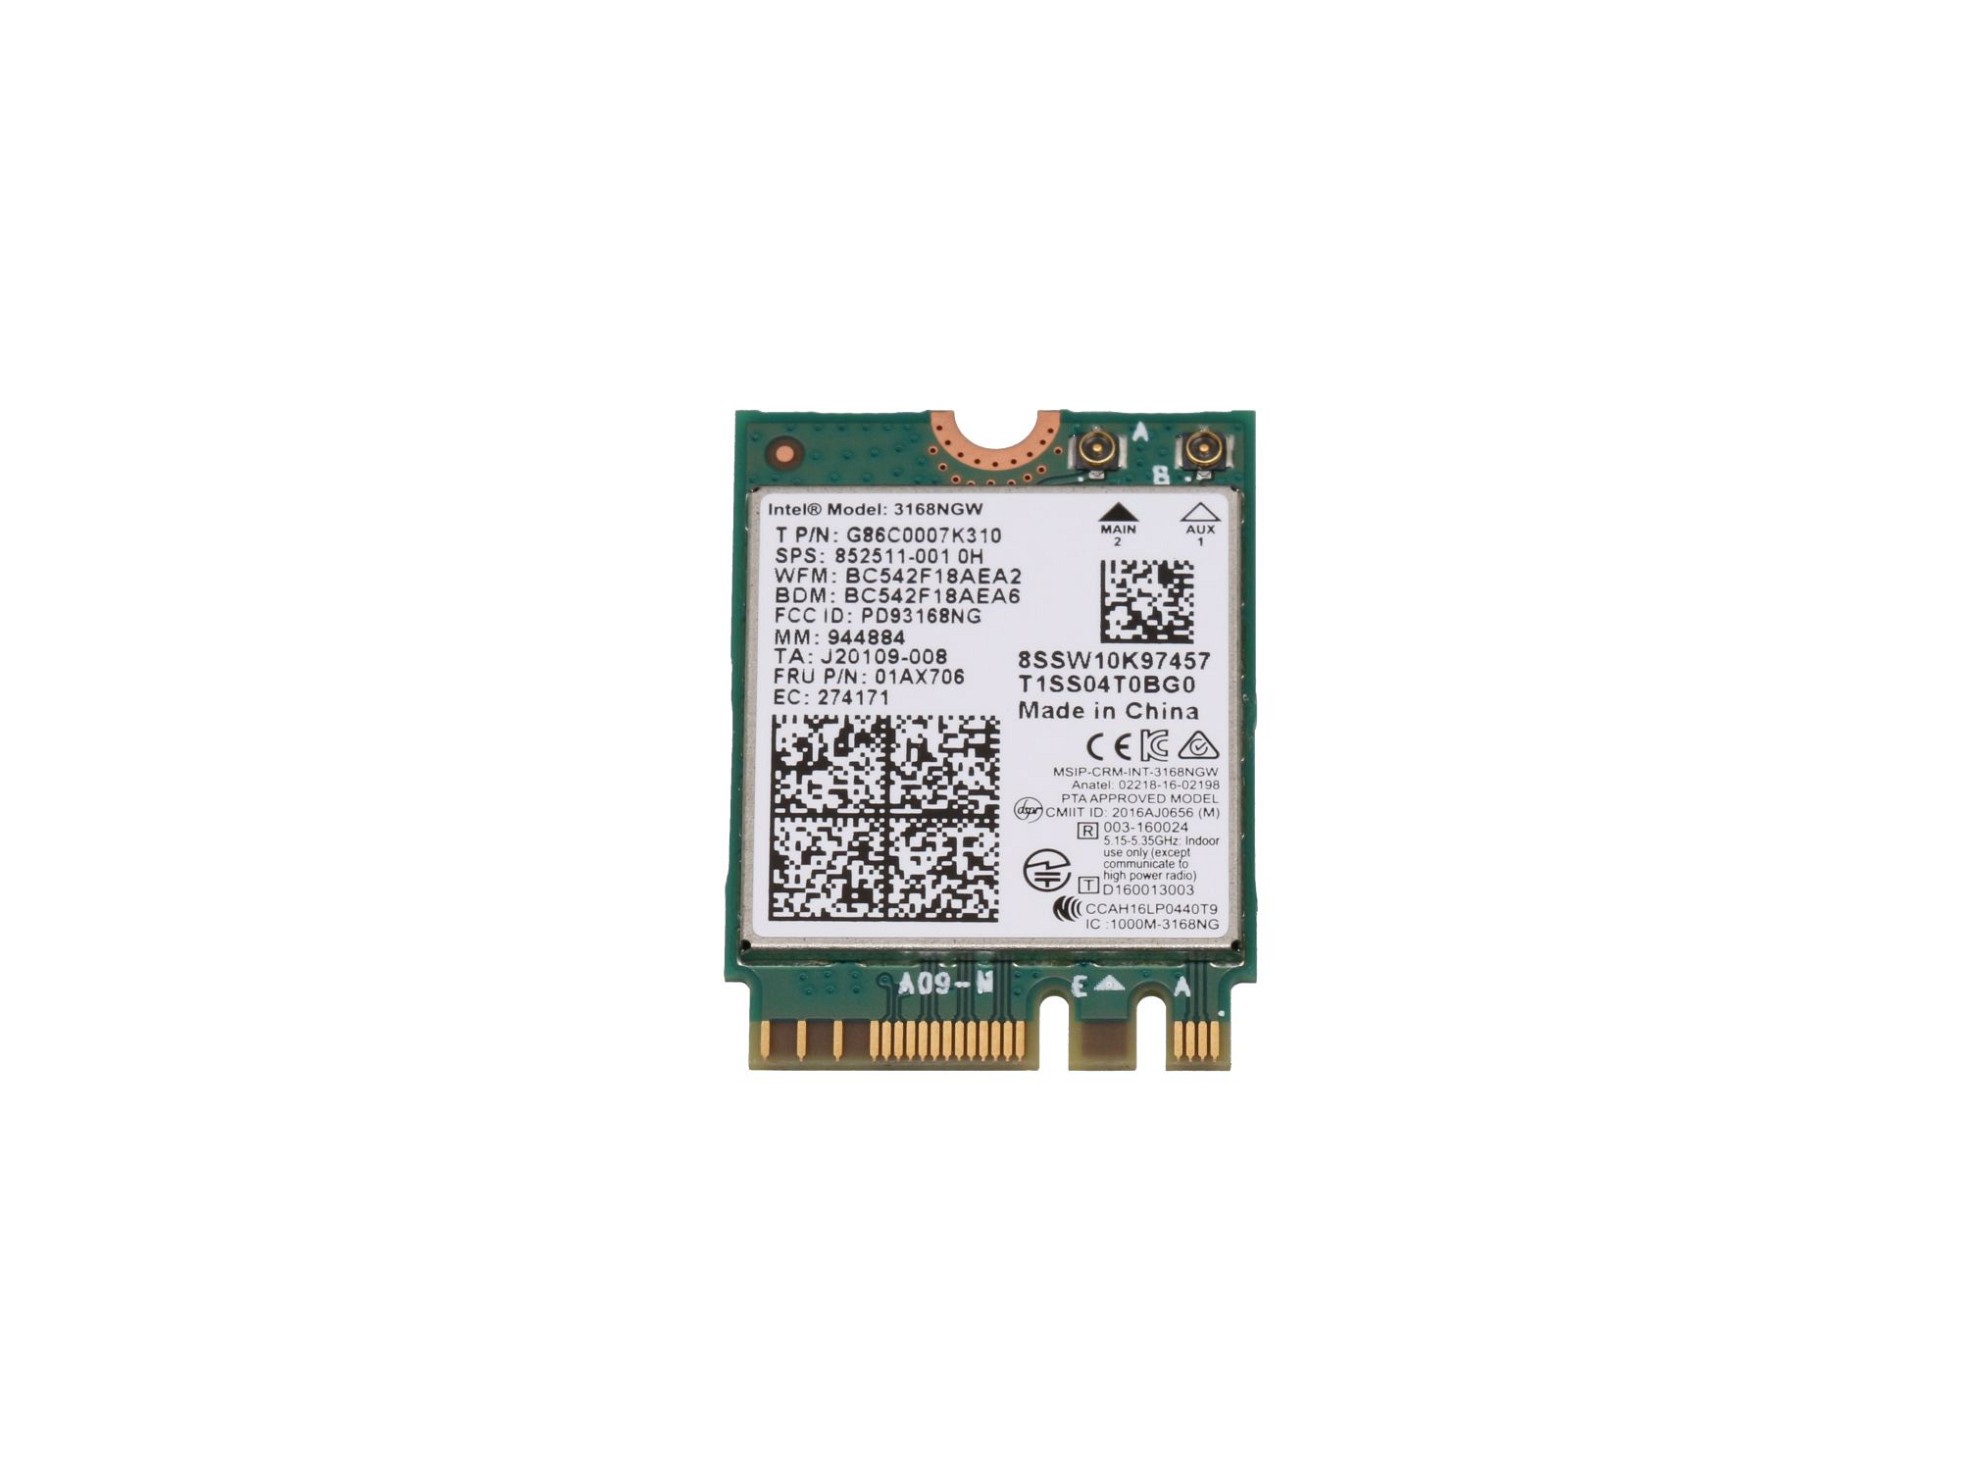 Intel J20109-008 WLAN/Bluetooth Karte